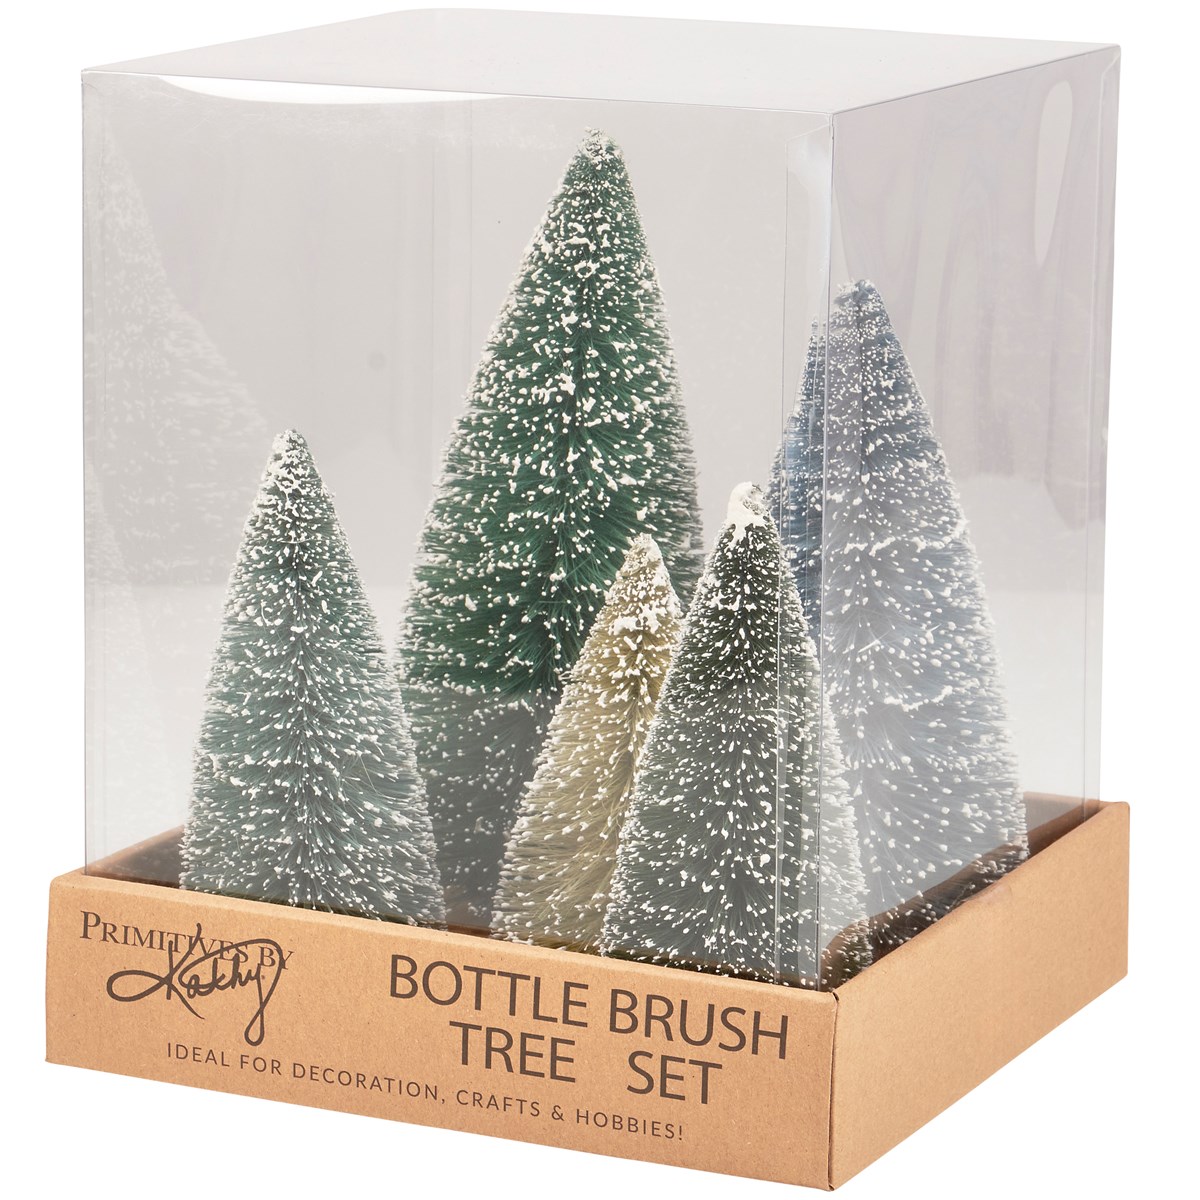 Snowy Green Bottle Brush Tree Set - Bristle, Wood, Wire, Mica